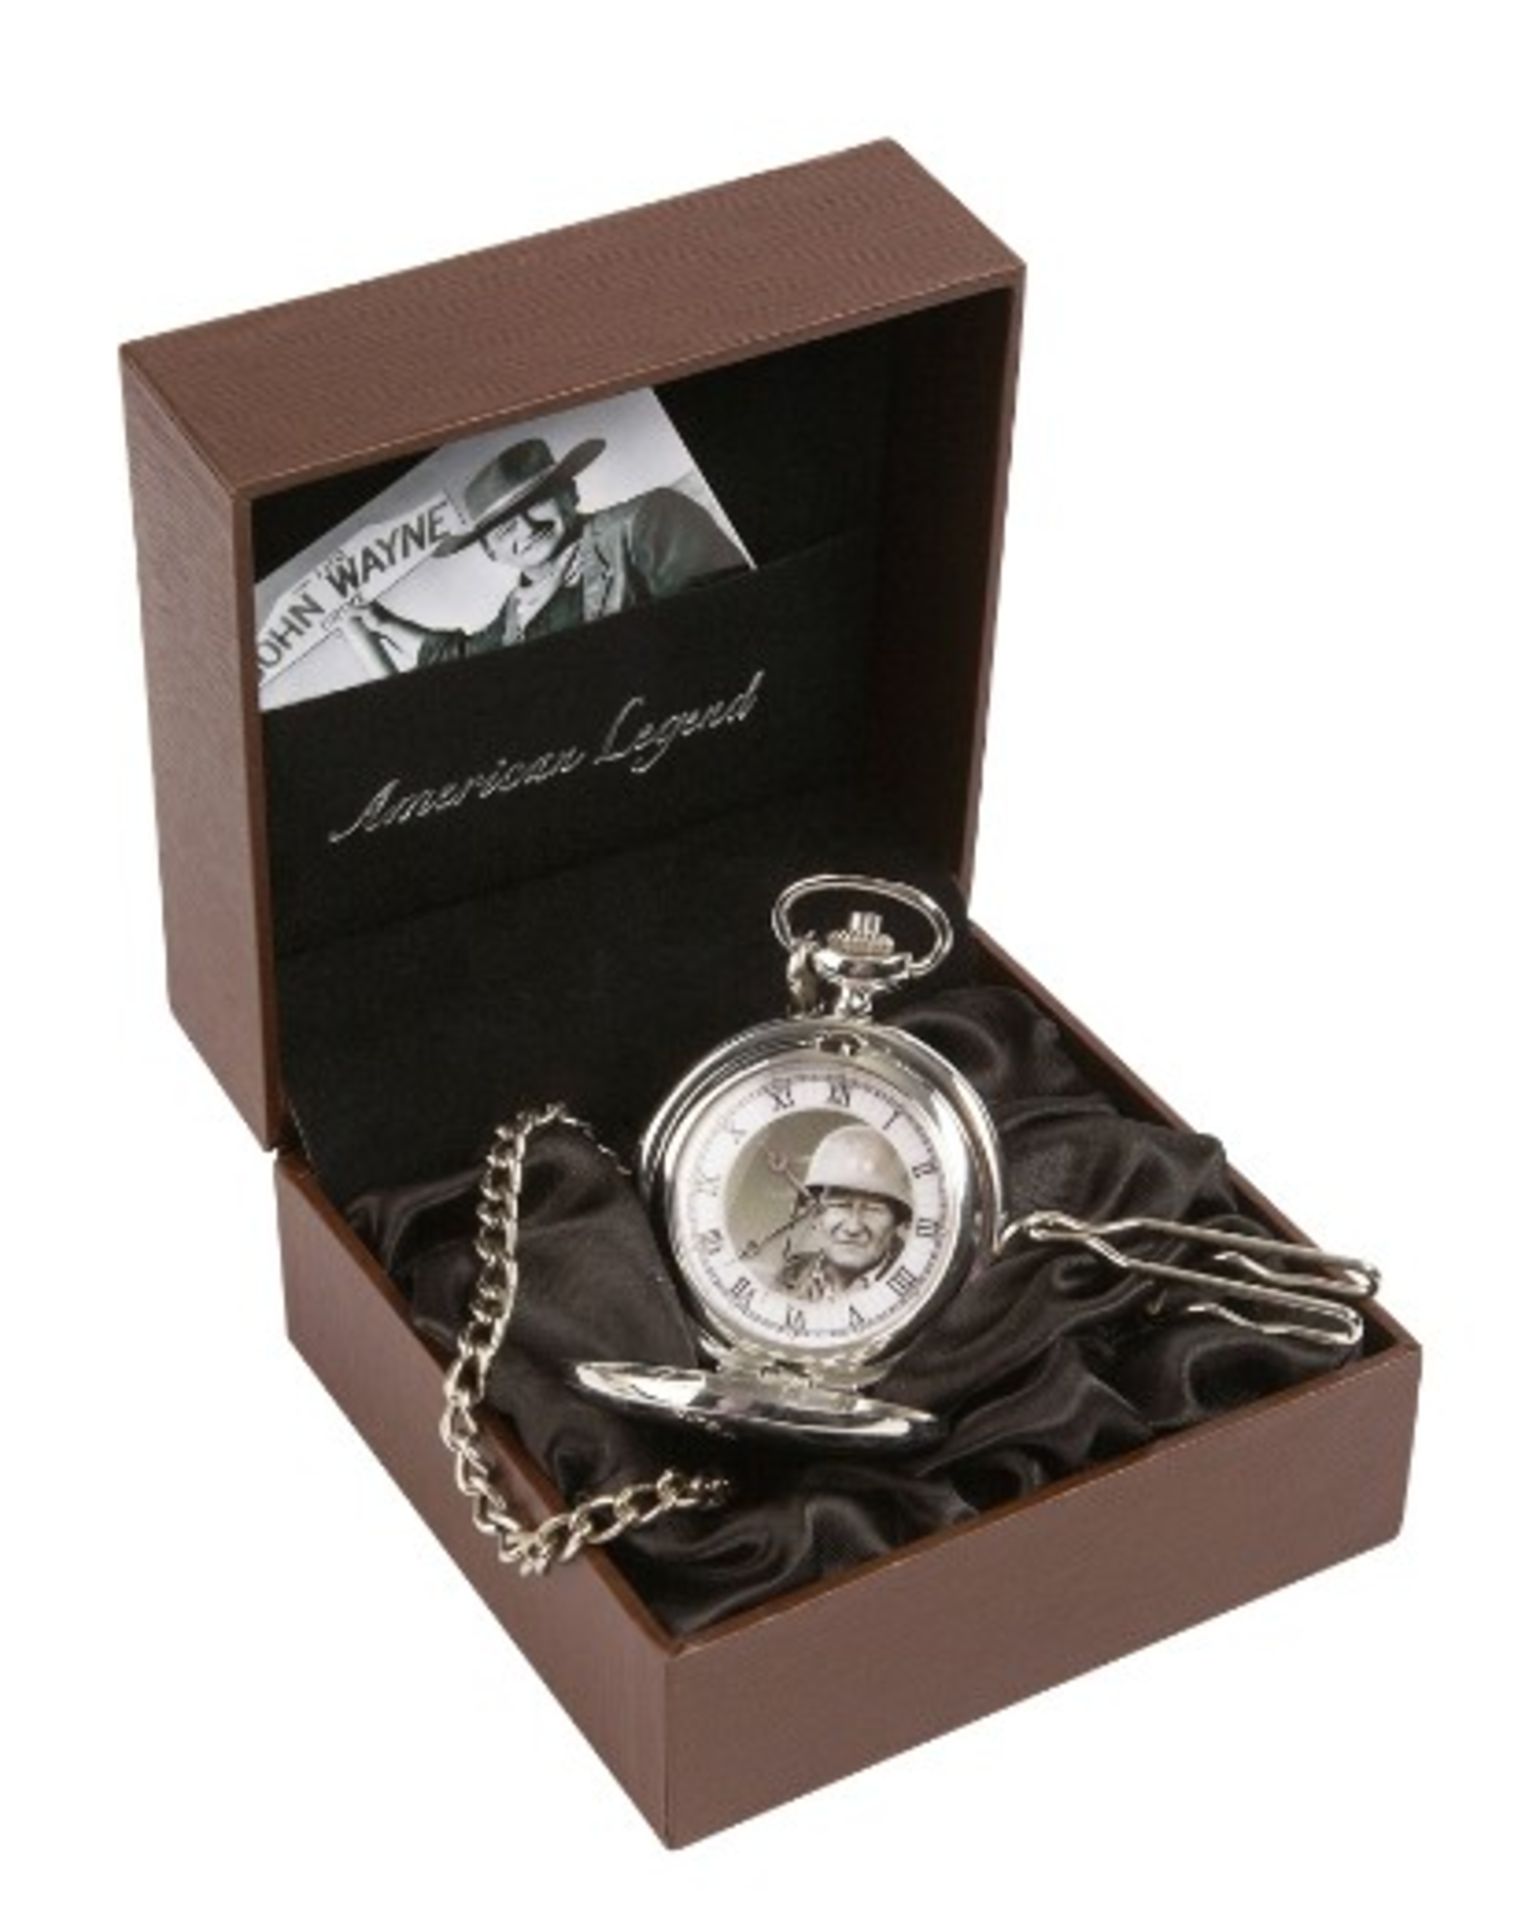 V *TRADE QTY* Brand New John Wayne World War Hero Pocket Watch With Chain - In Gift Box RRP £16.99 X